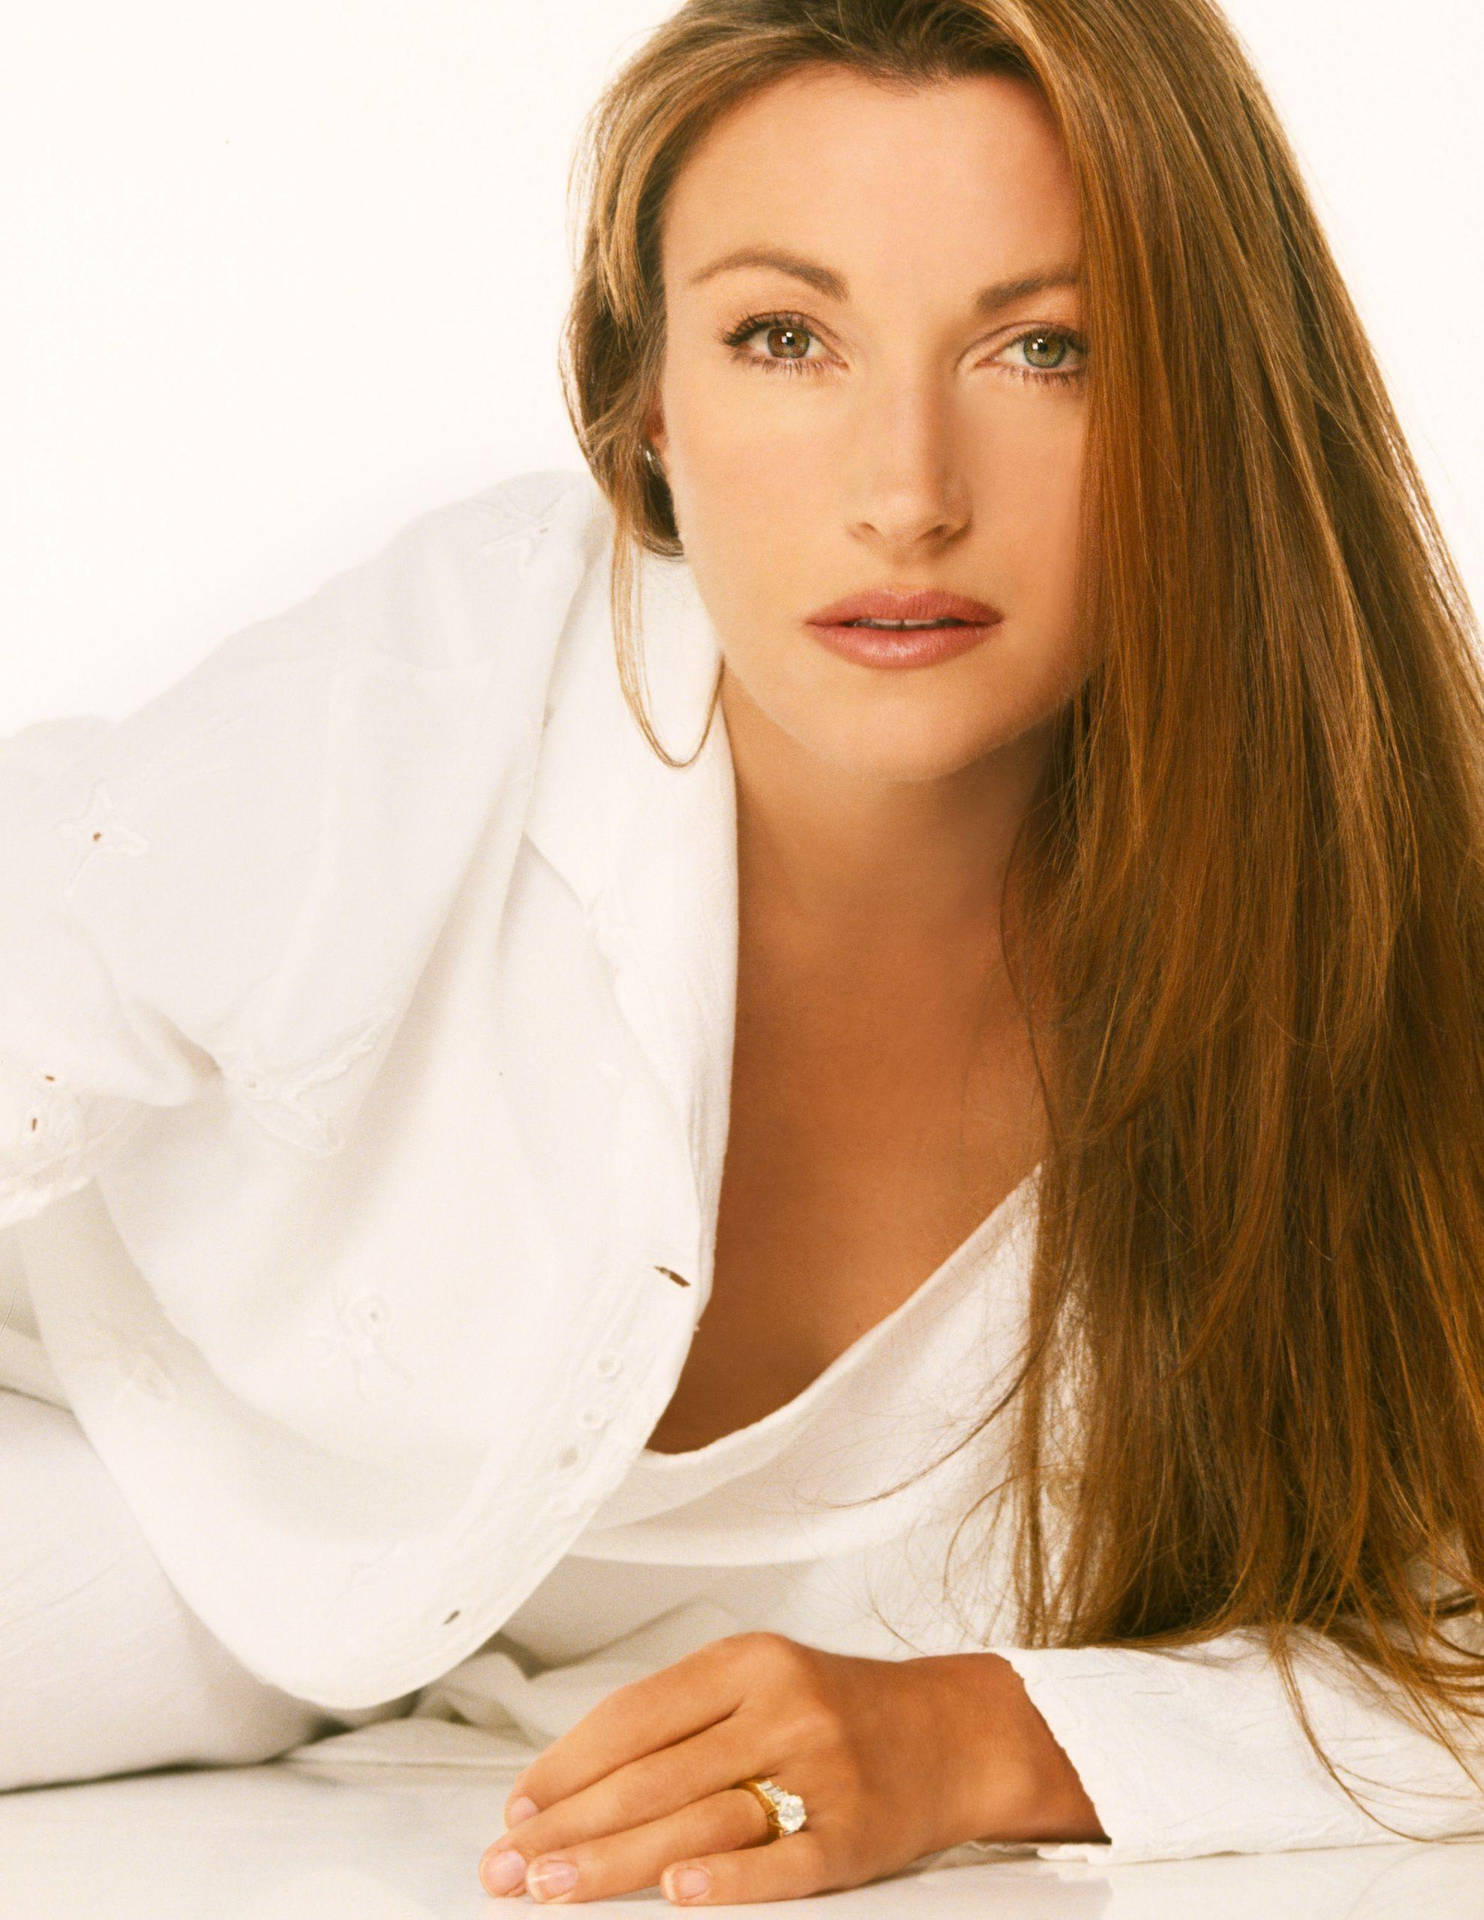 Jane Seymour In A Sexy White Top Wallpaper